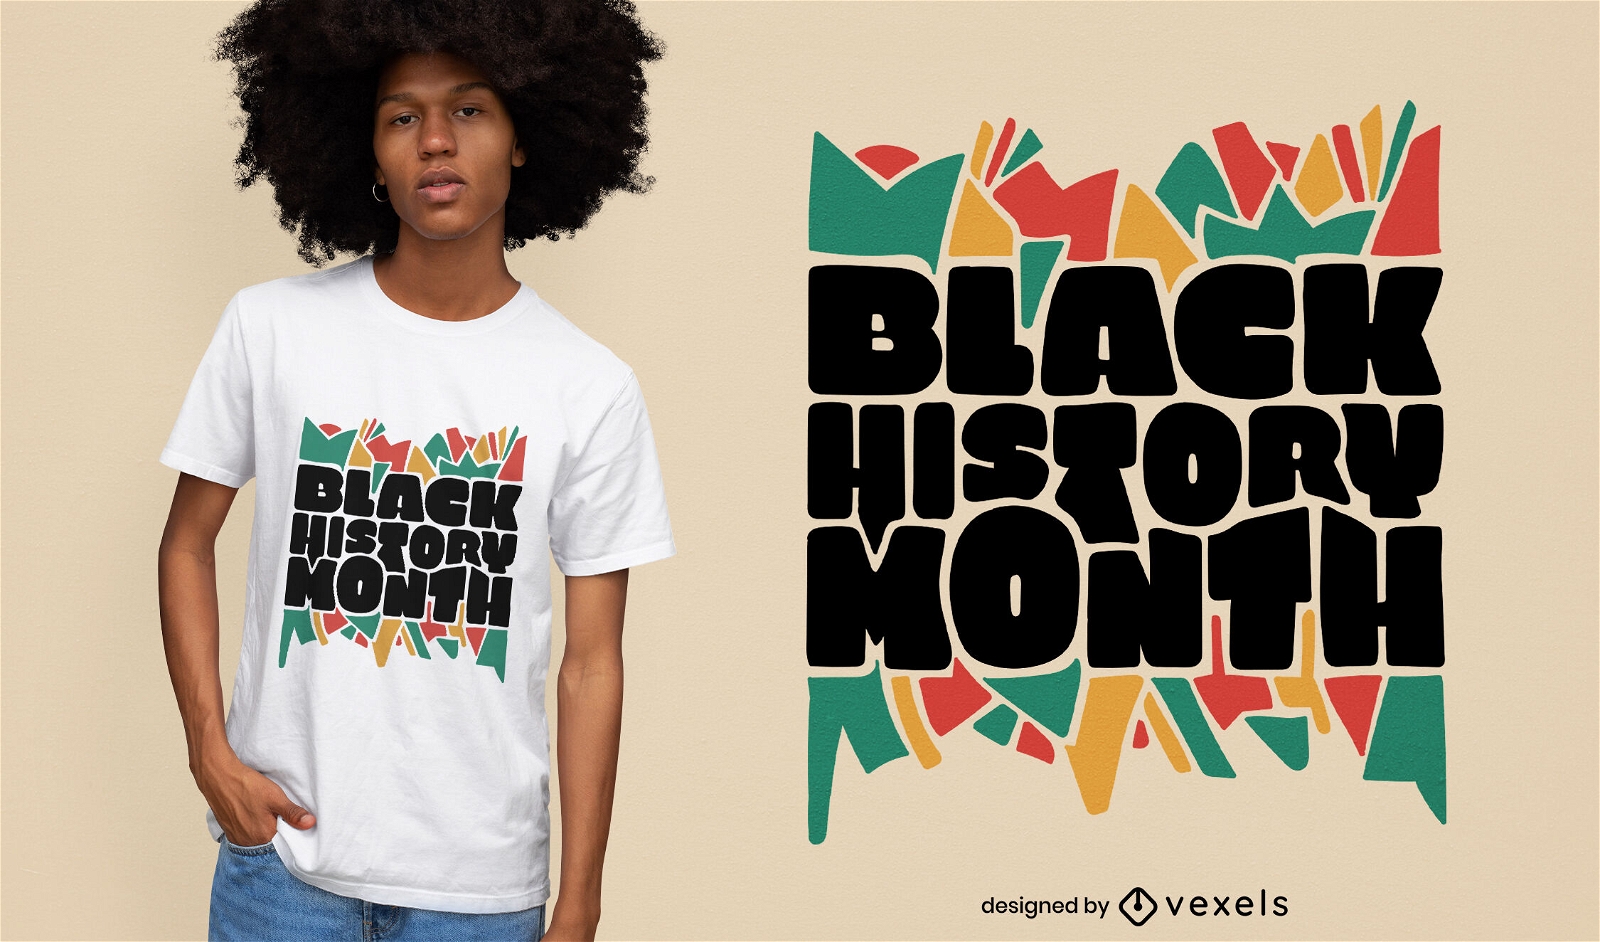 Black history month flat t-shirt design